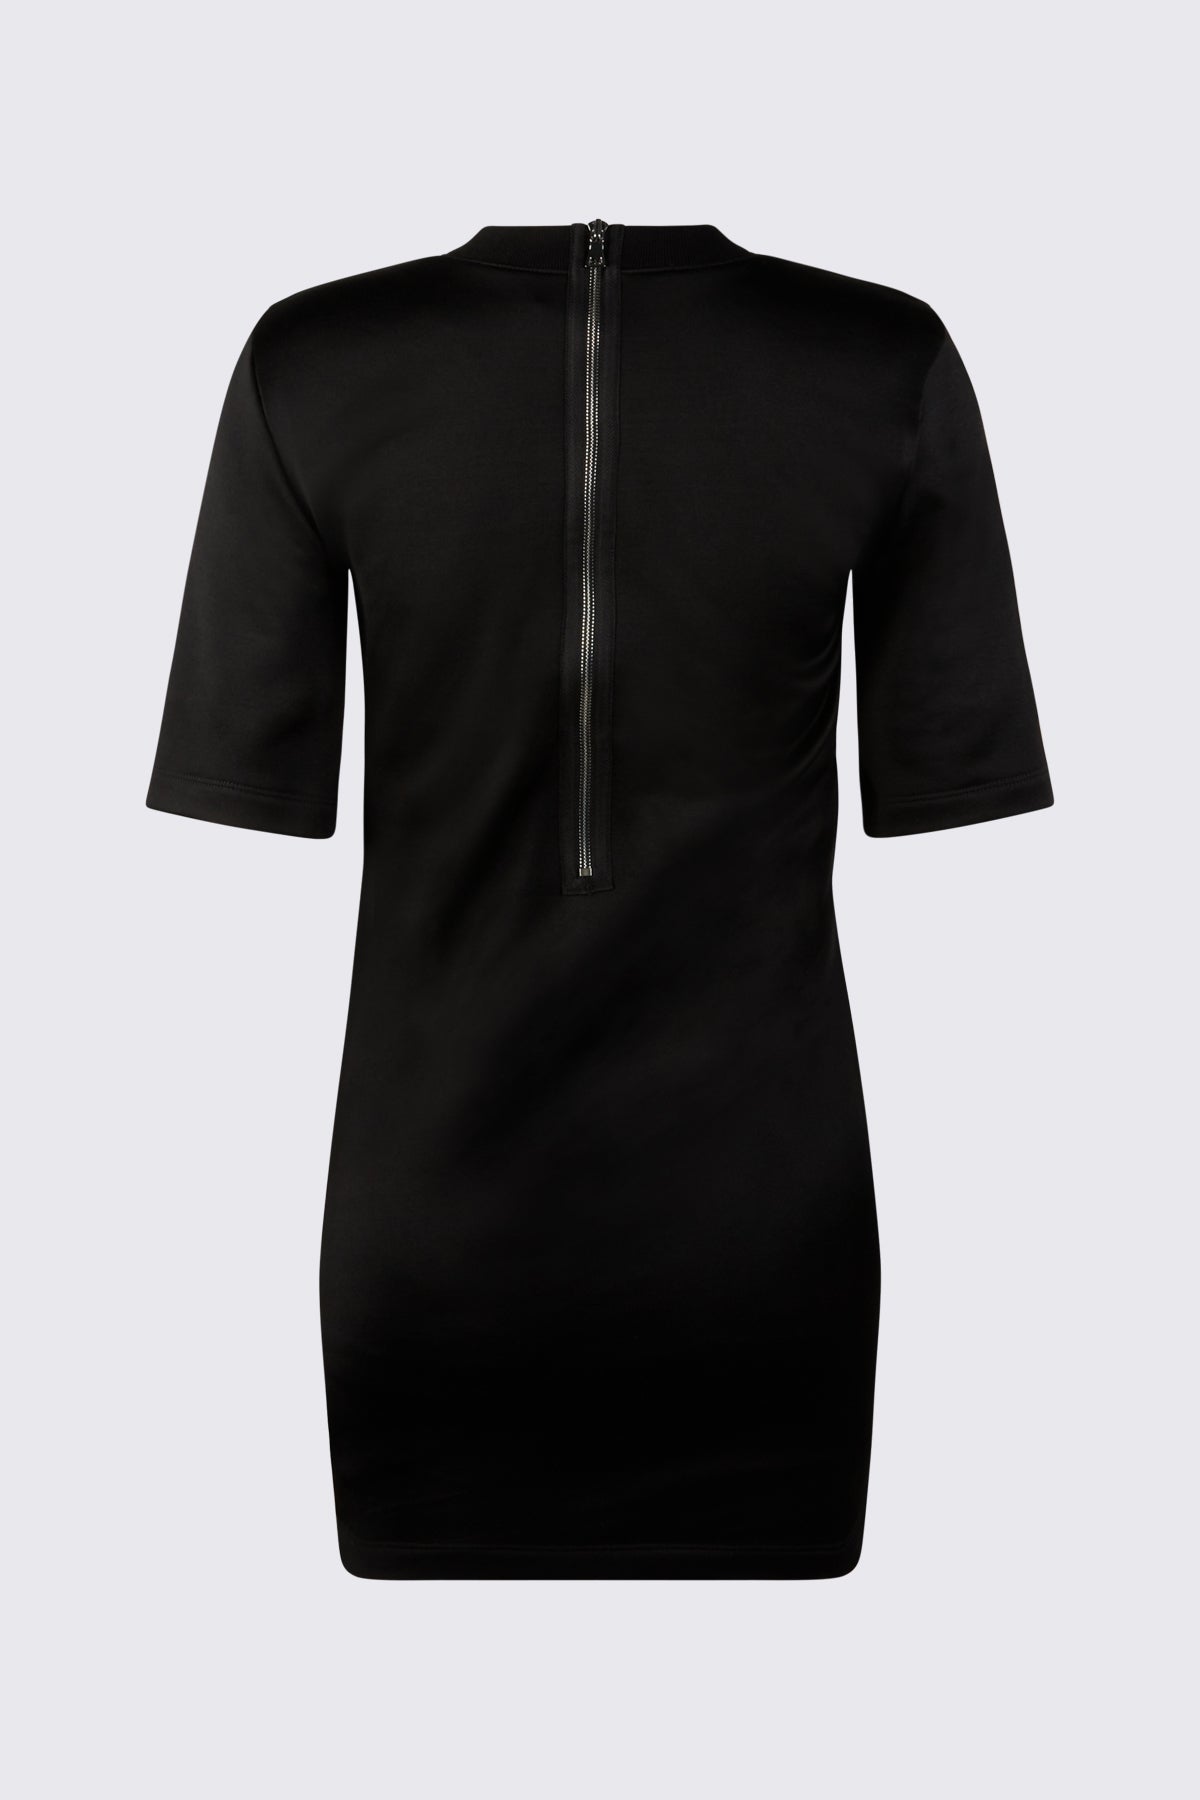 DIONIRA DRESS | BLACK